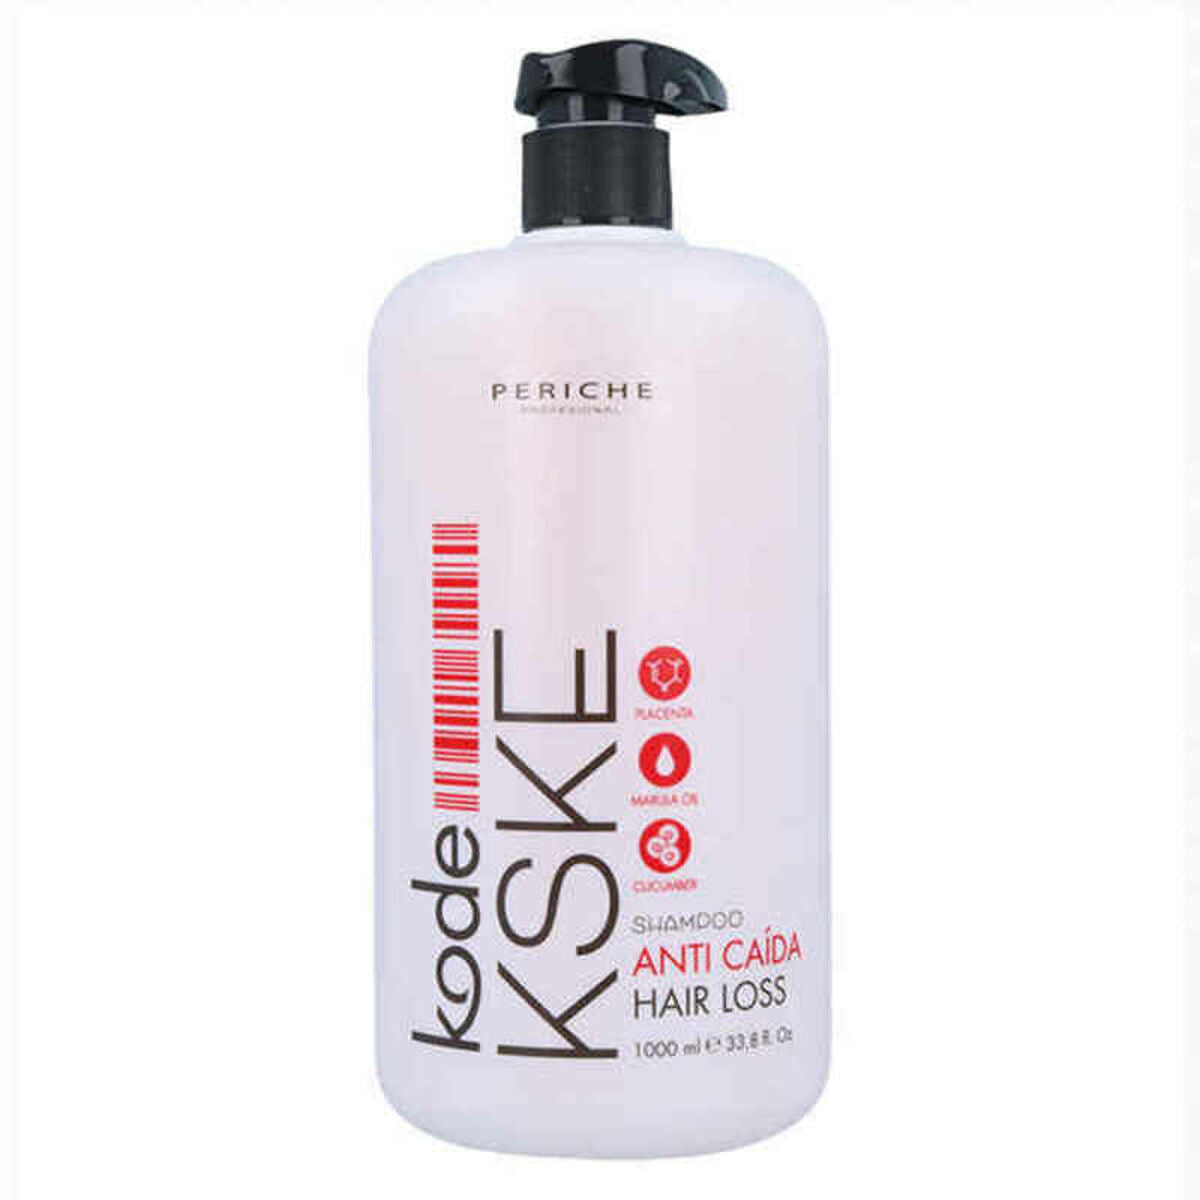 Anti-Hair Loss Shampoo Kode Kske / håravfall Periche Kode Kske 1 L (1000 ml)